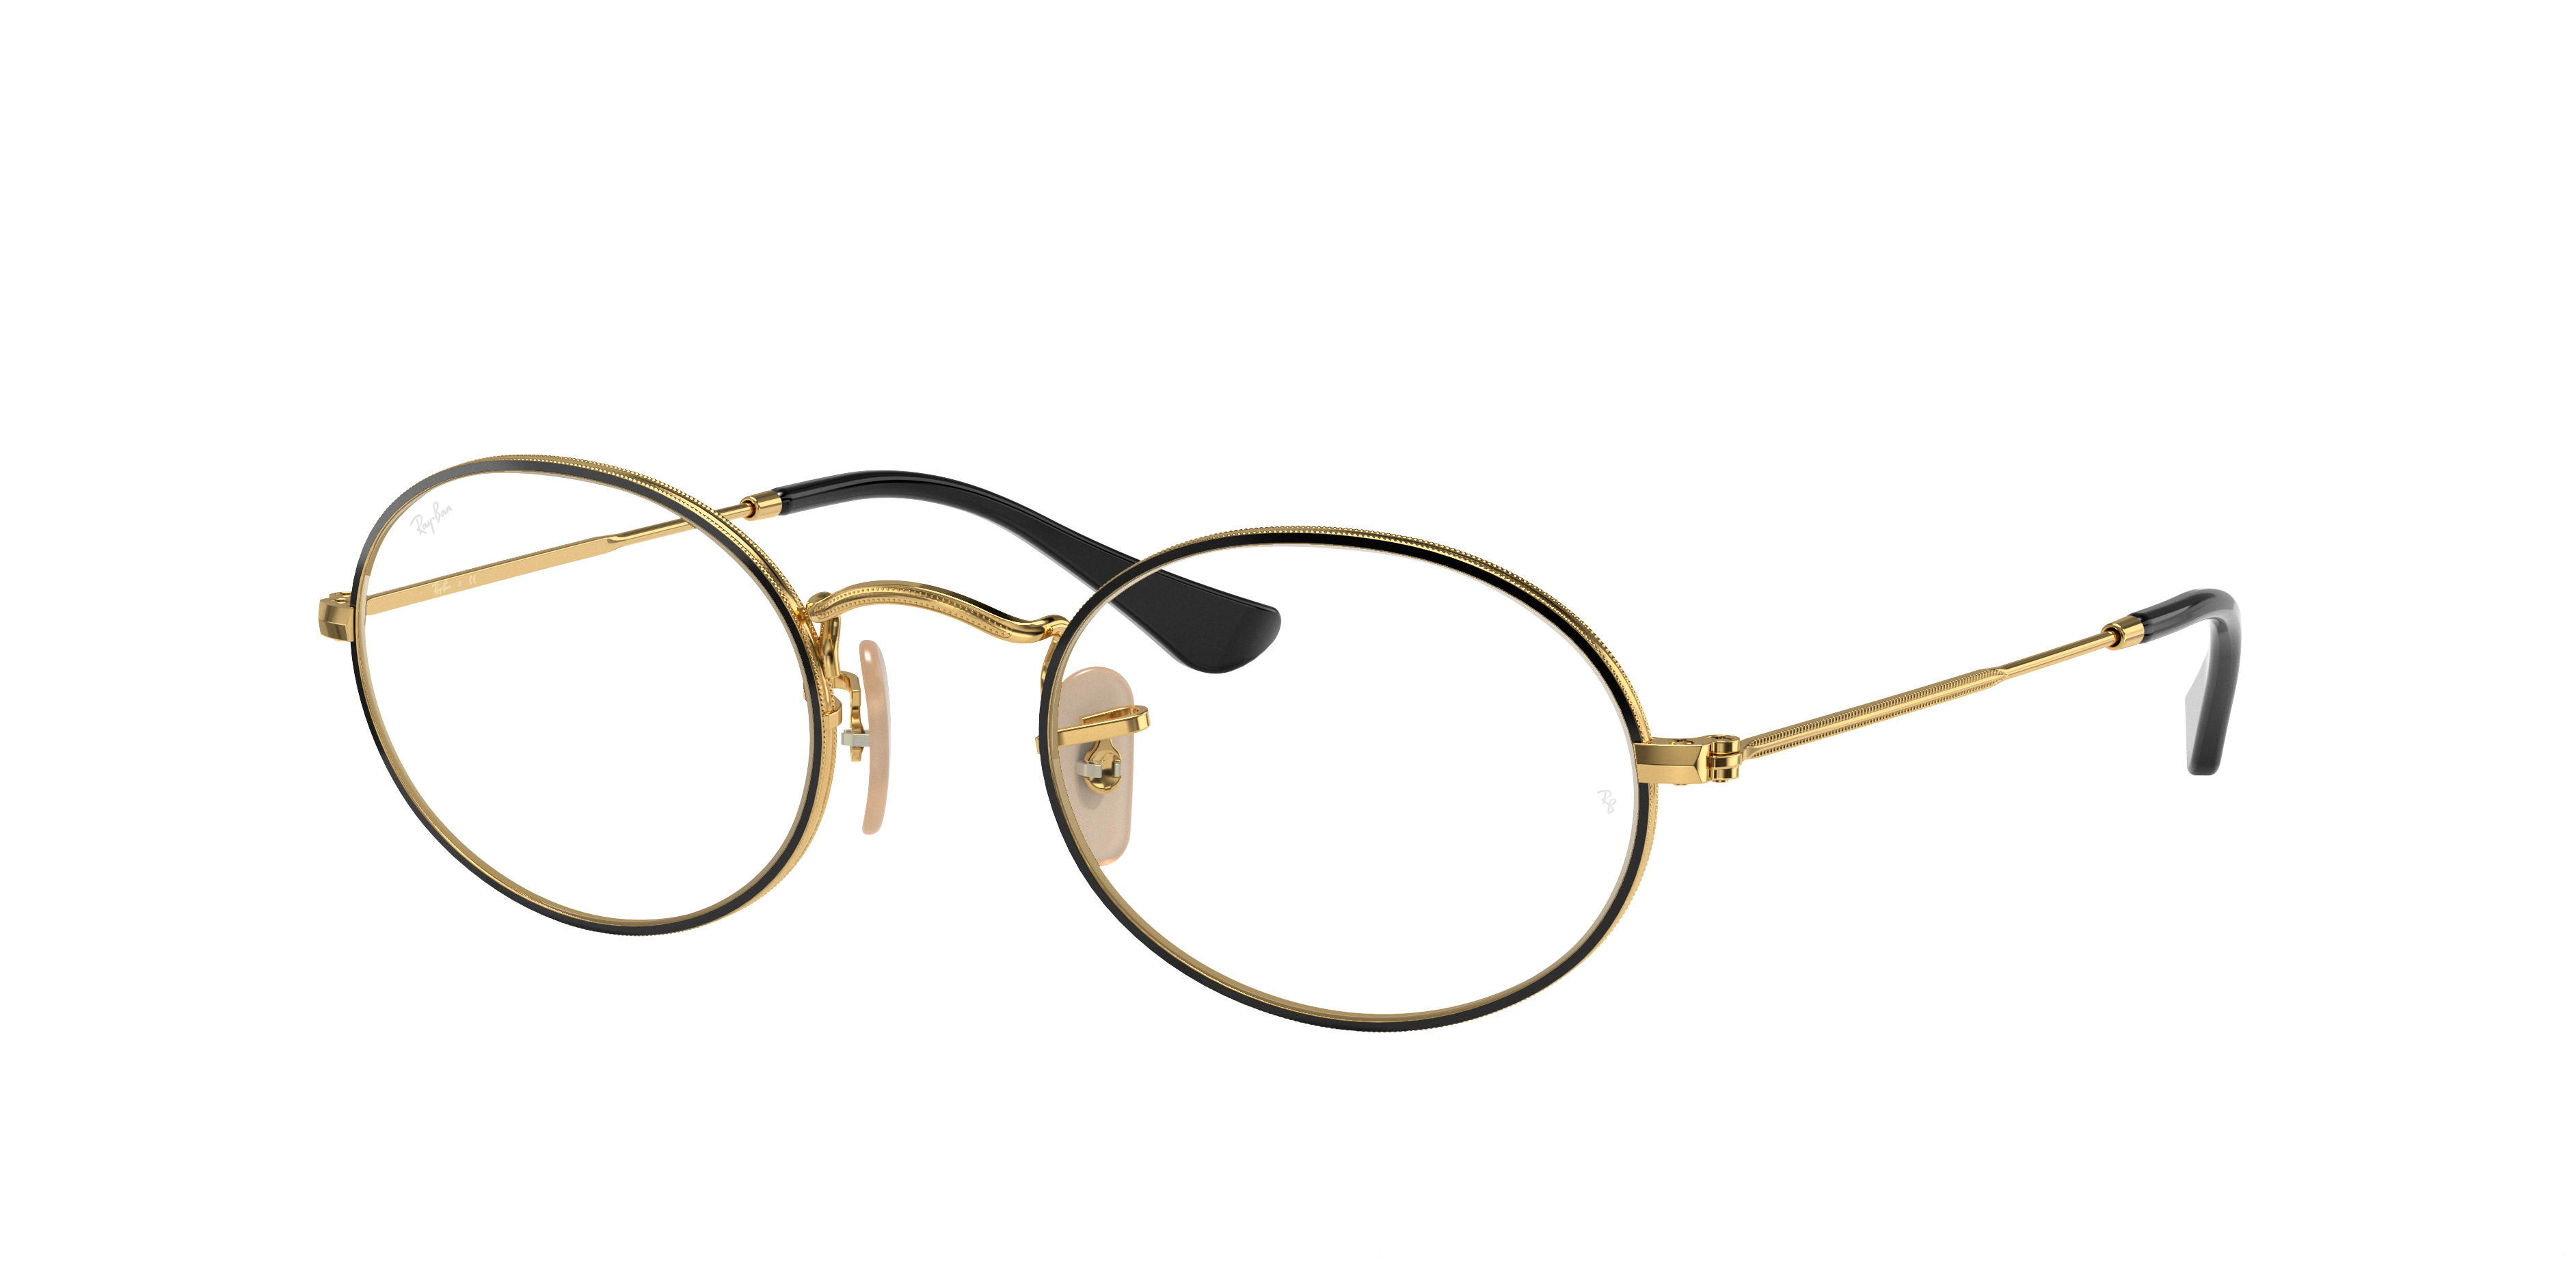 oval-optics-eyeglasses-with-black-on-gold-frame-ray-ban